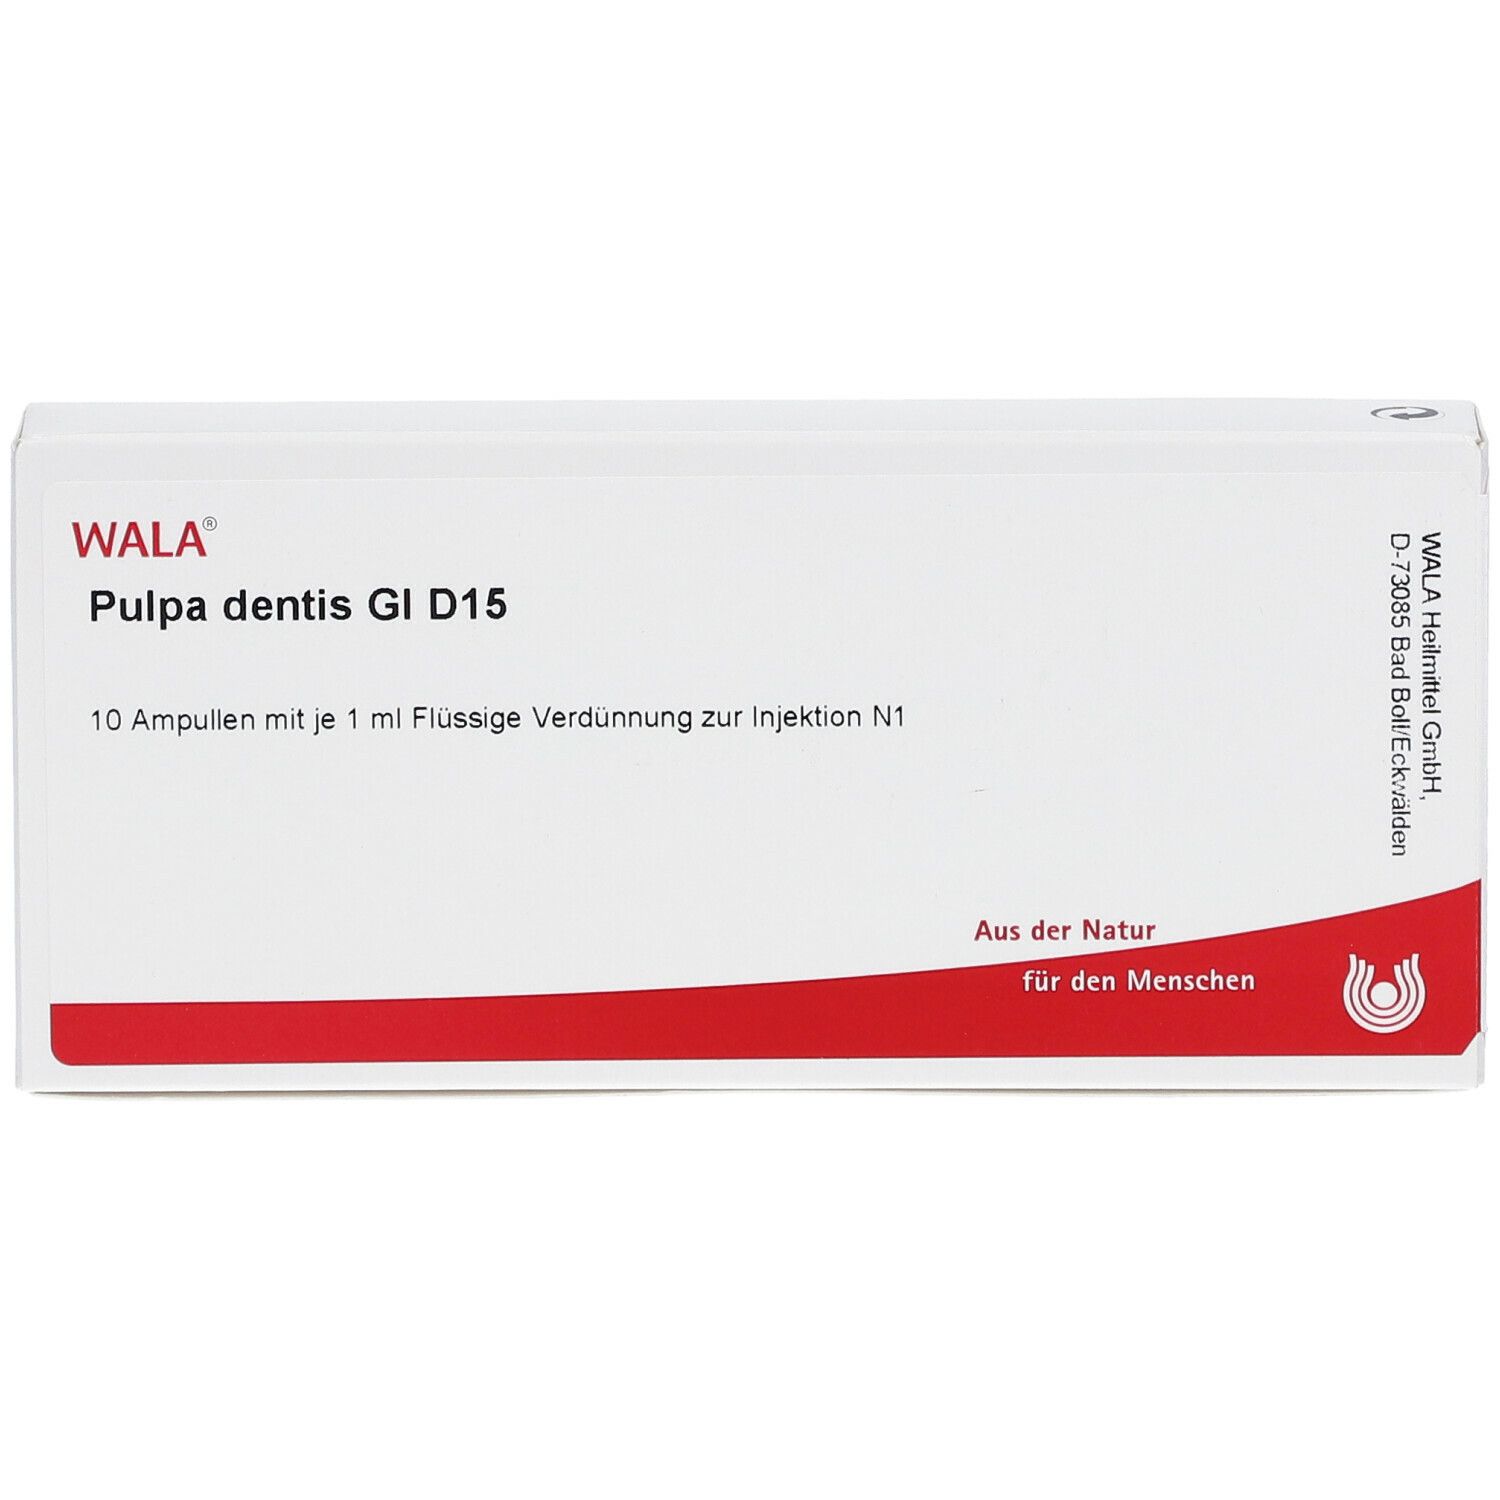 WALA® Pulpa dentis Gl D 15